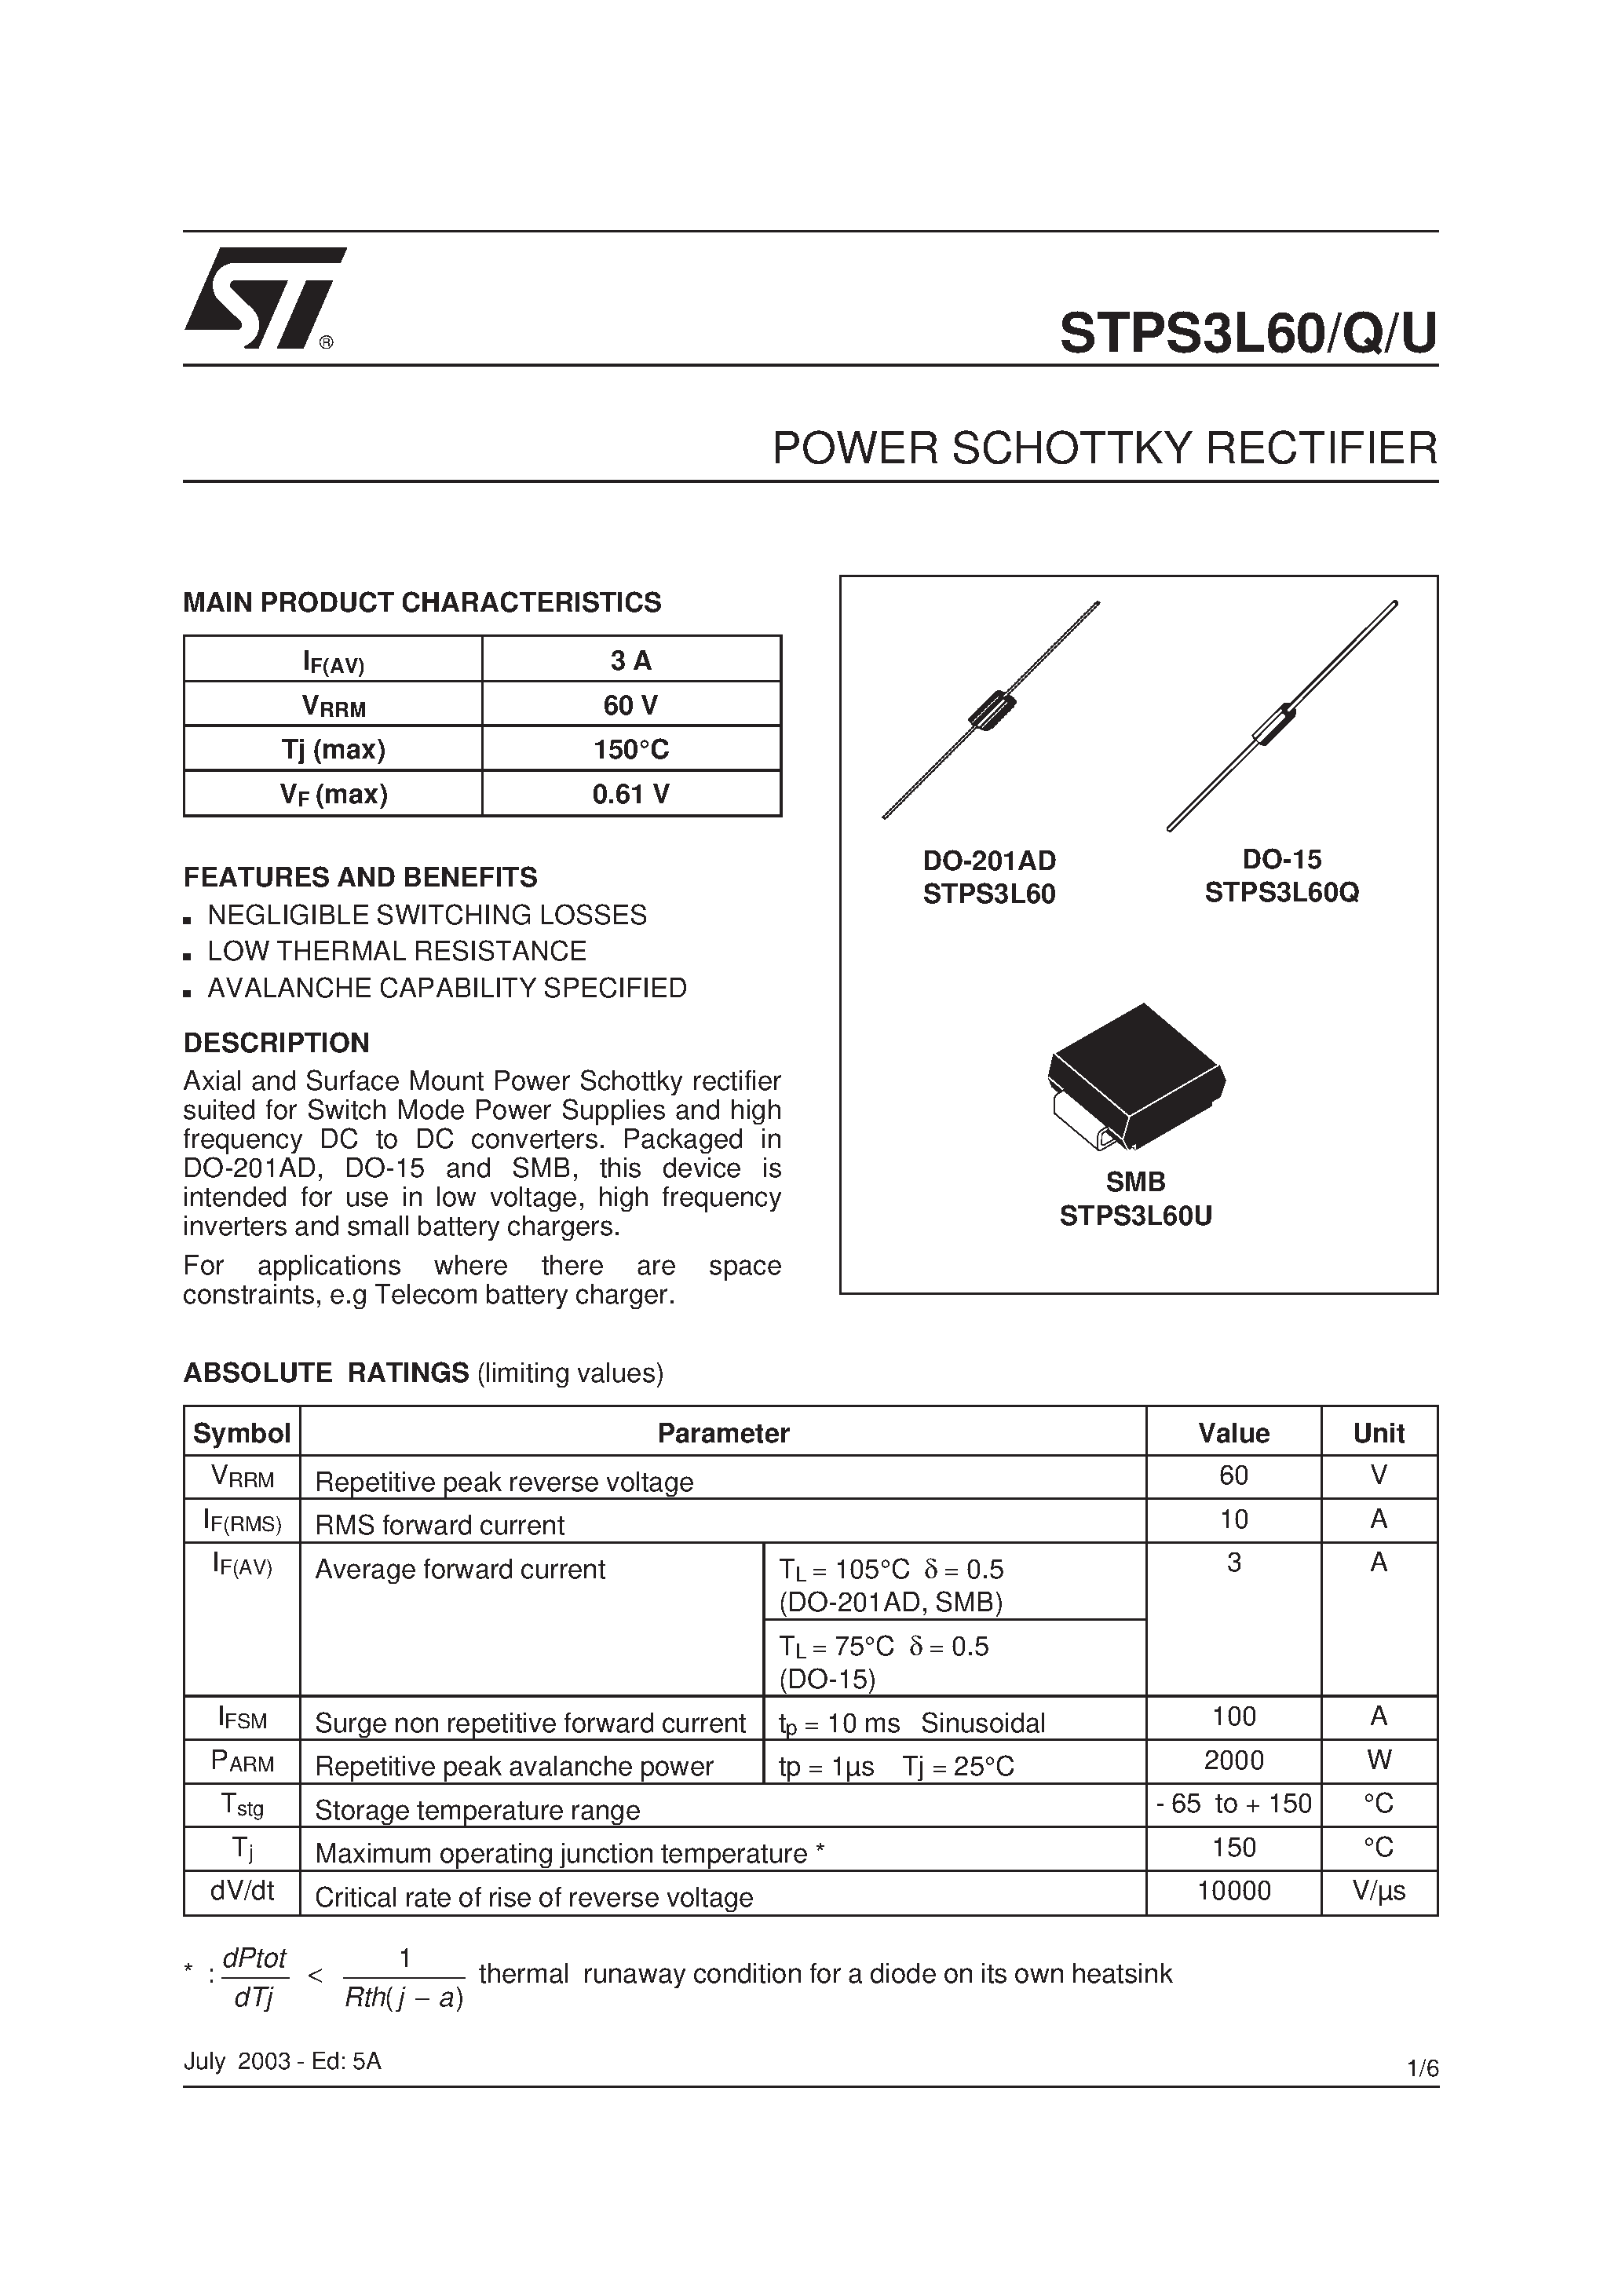 Datasheet STPS3L60 - (STPS3L60/Q/U) POWER SCHOTTKY RECTIFIER page 1